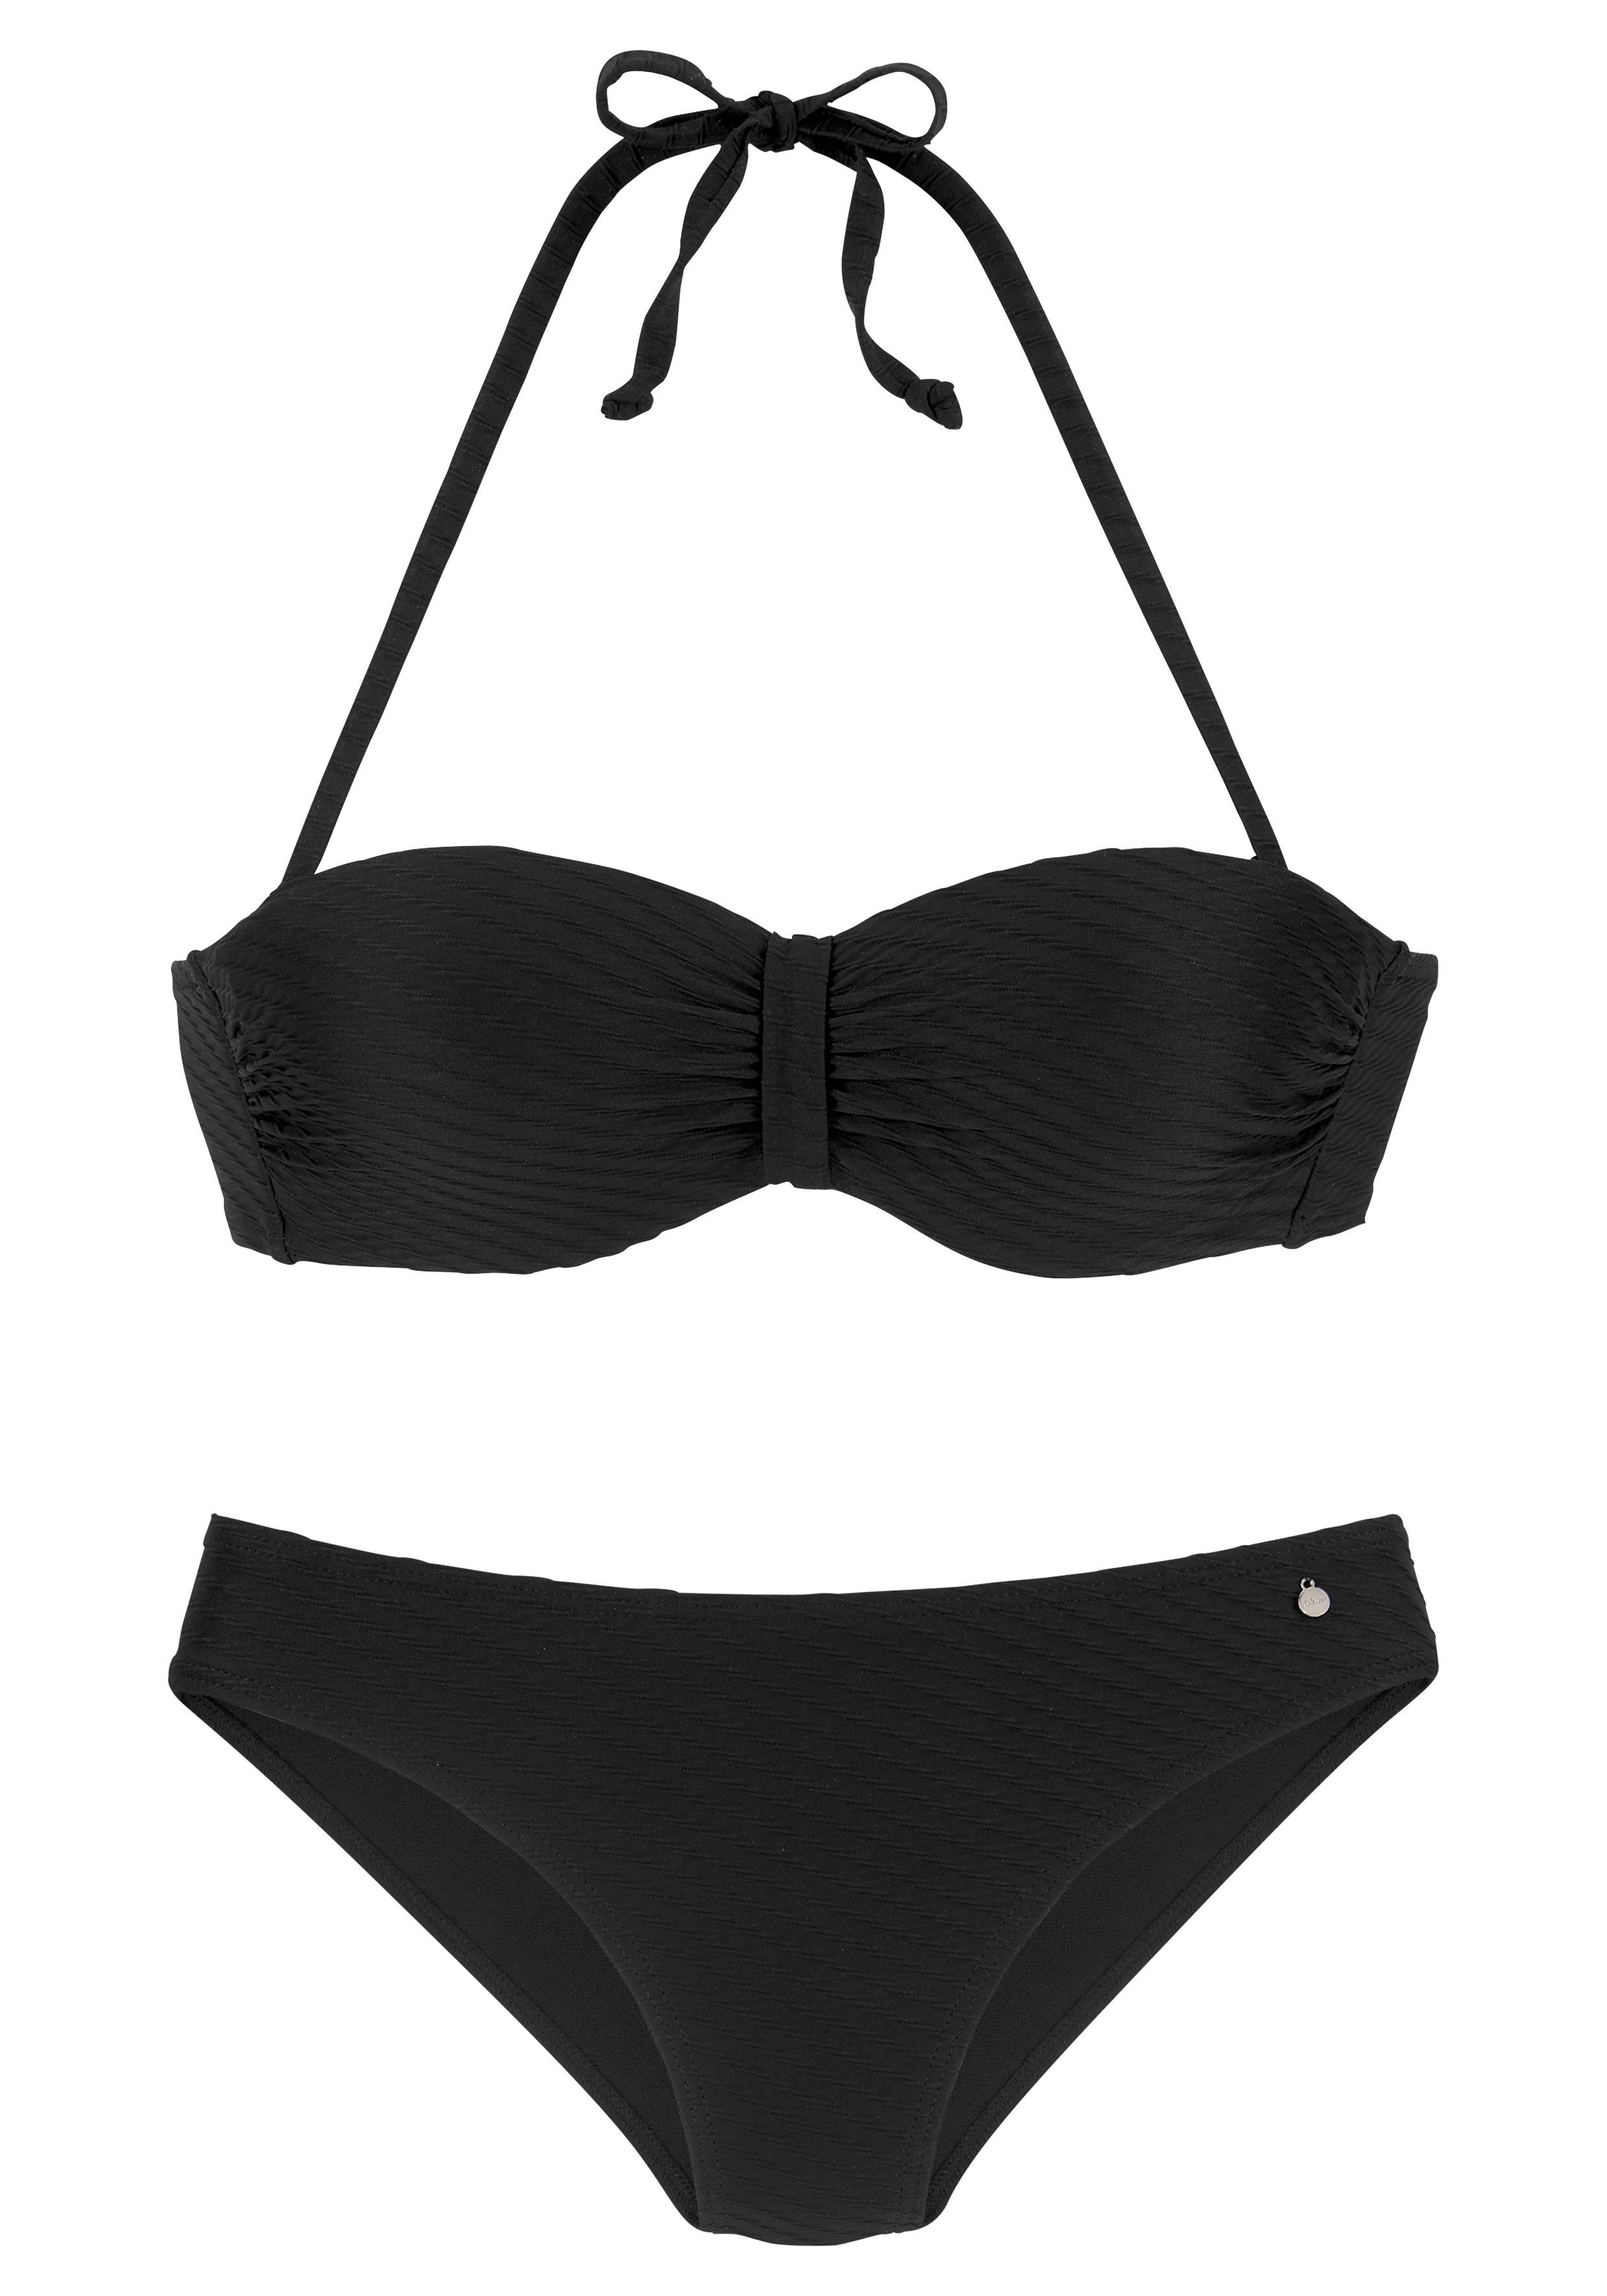 Bügel-Bandeau-Bikini s.Oliver Strukturware schwarz